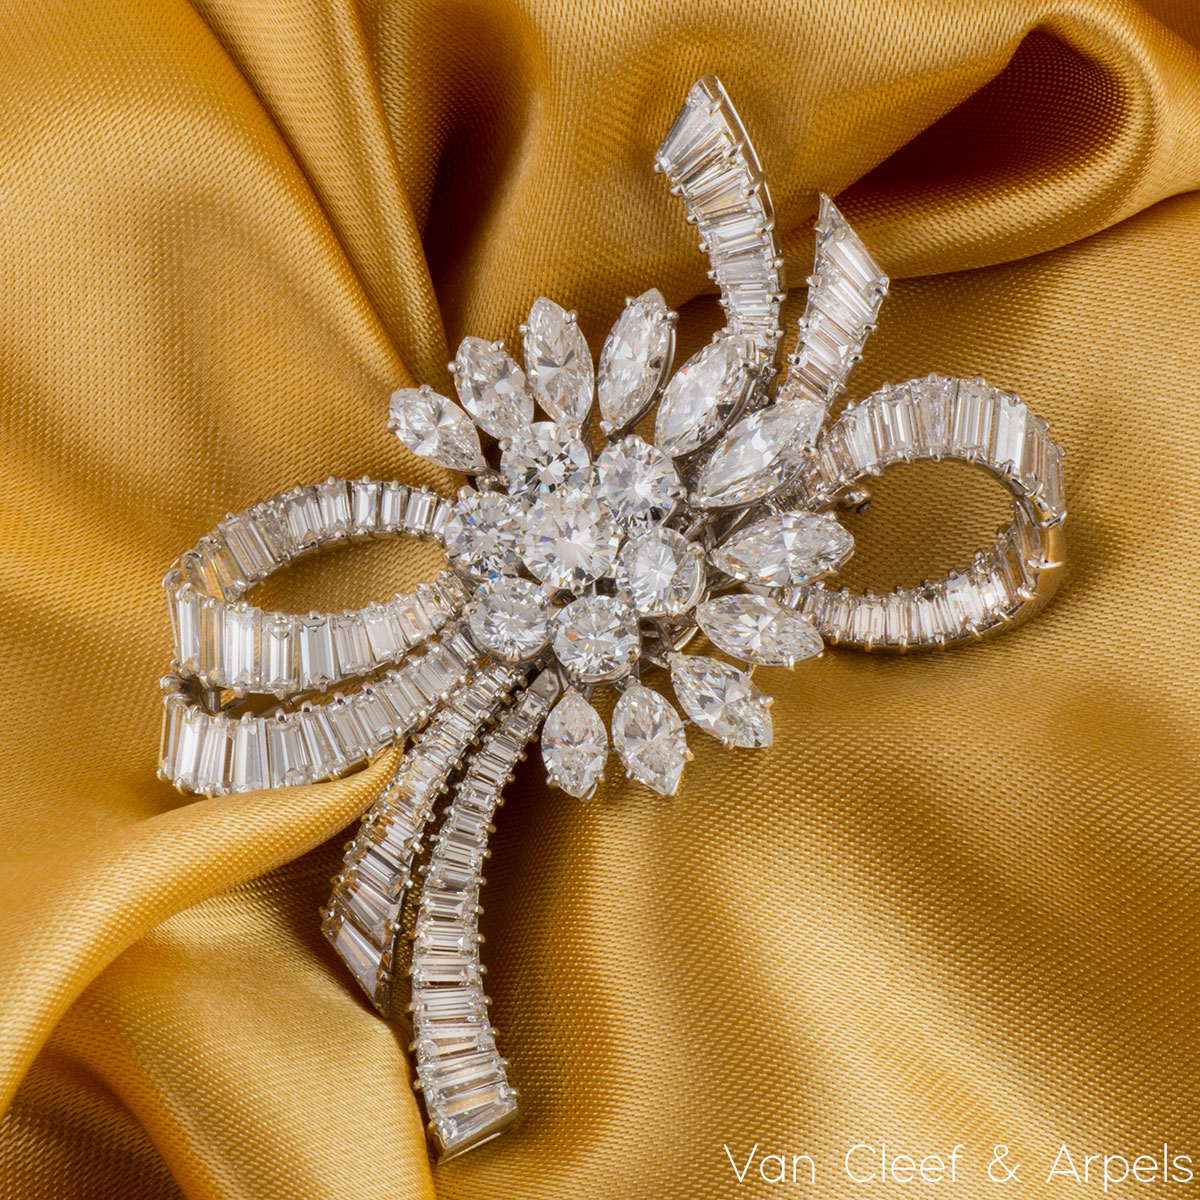 Van Cleef & Arpels Diamonds Brooch c.1950.